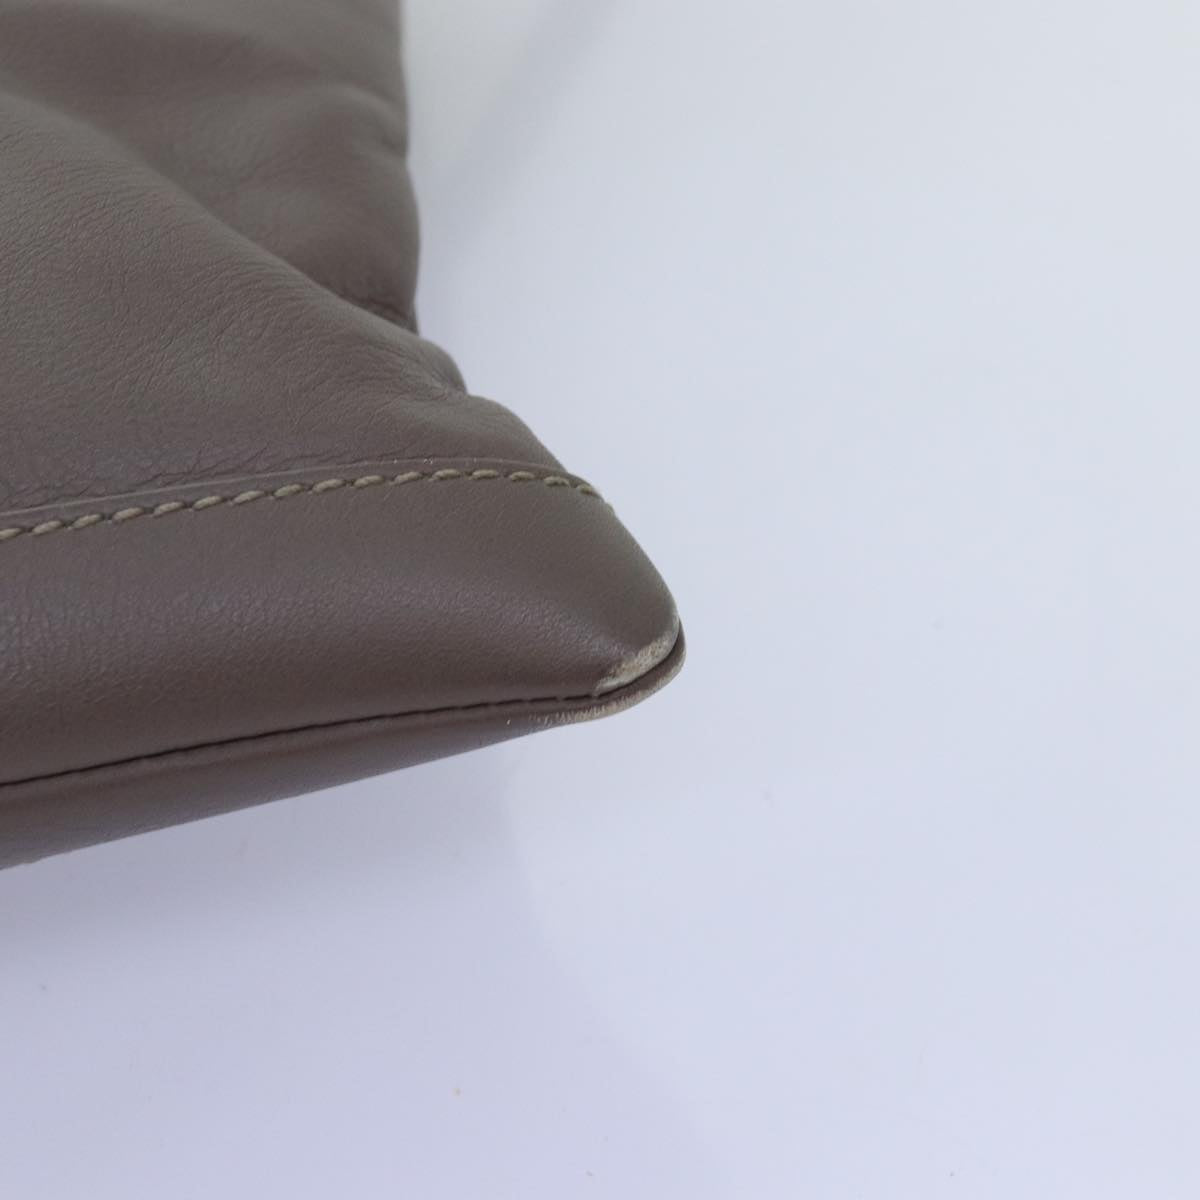 BALENCIAGA Clutch Bag Leather Gray 273022 Auth am6190